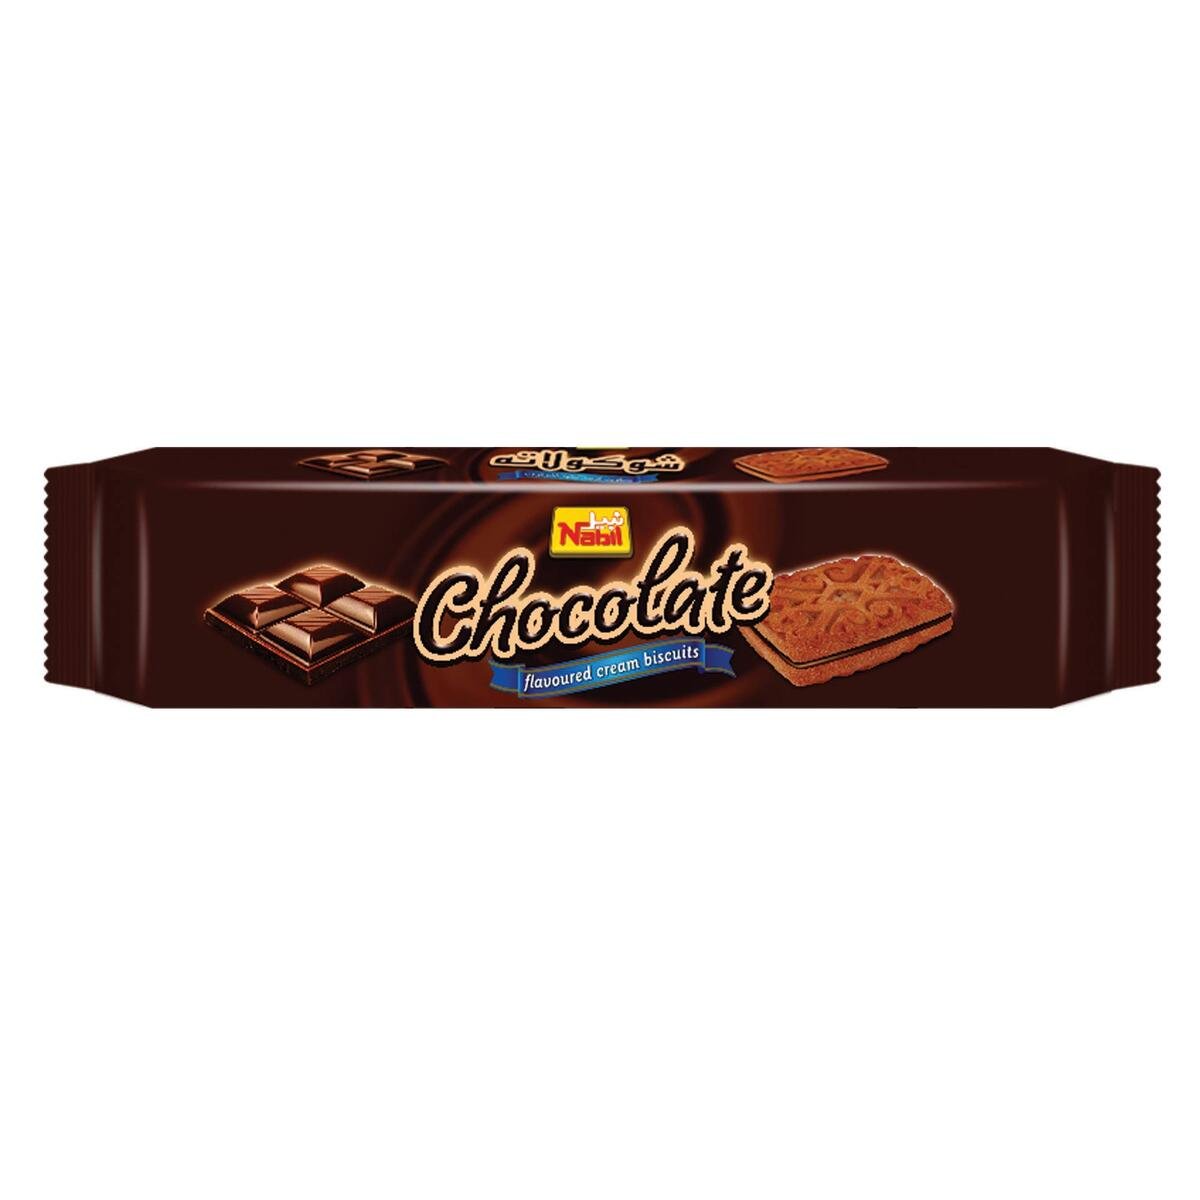 Nabil Chocolate Flavoured Cream Biscuits 82g